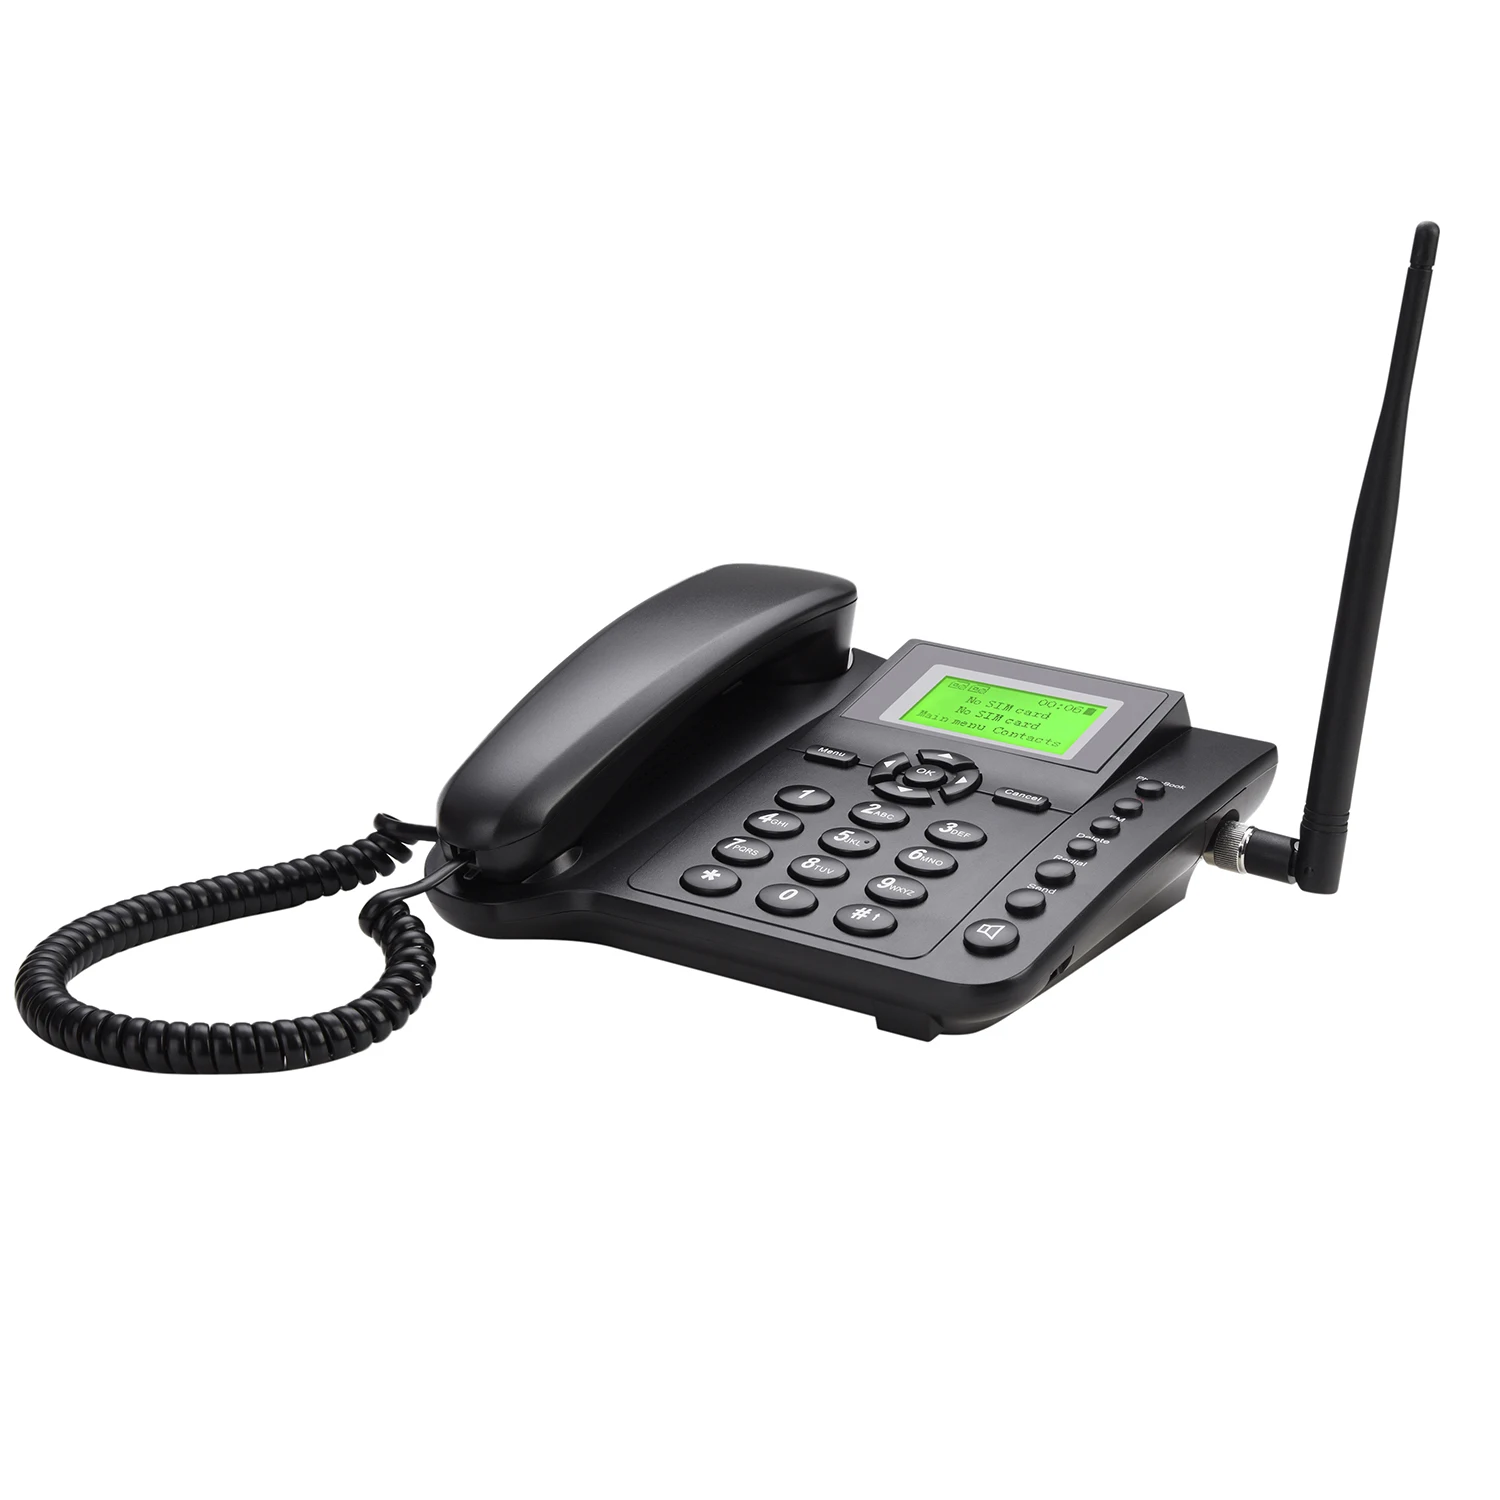 Wireless 4G Landline GSM SIM Card Fixed Telephone fits Company